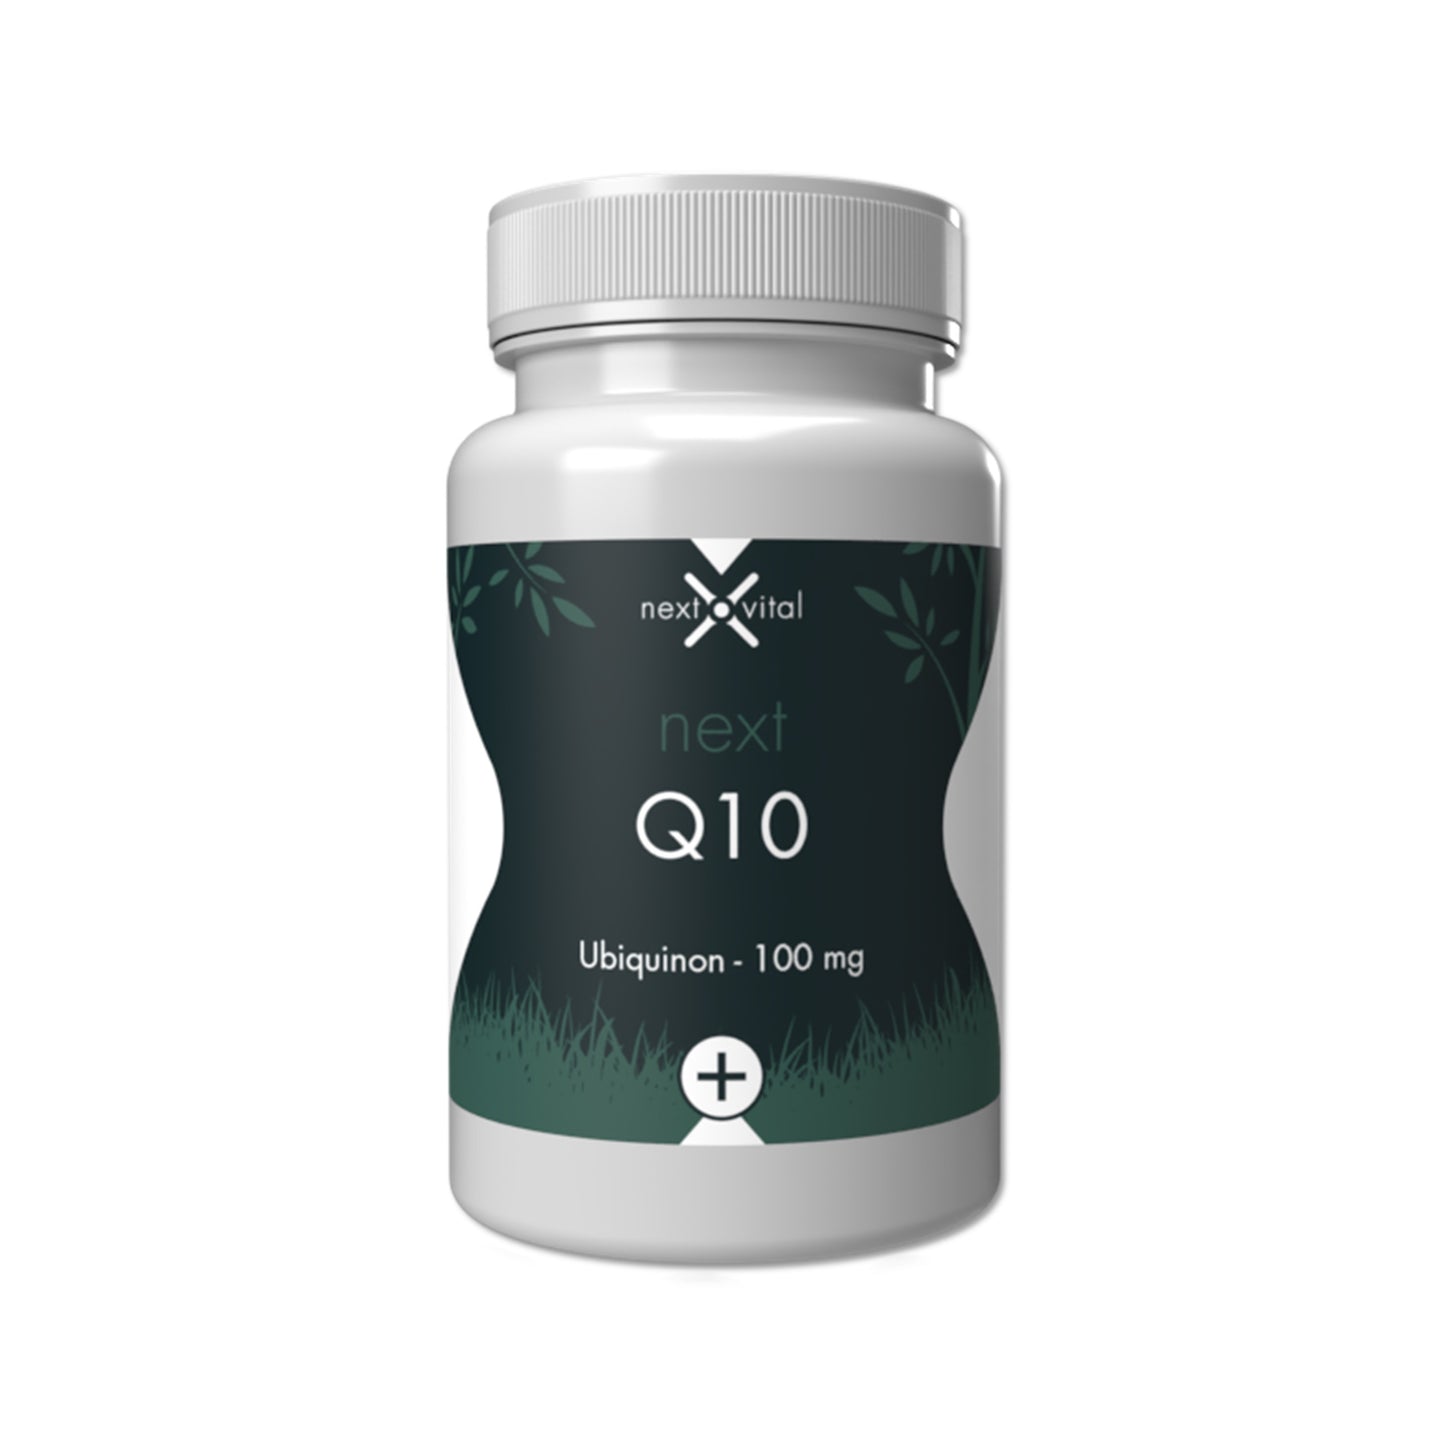 next Q10 - Ubiquinon 100 mg, 60 vegane Kapseln